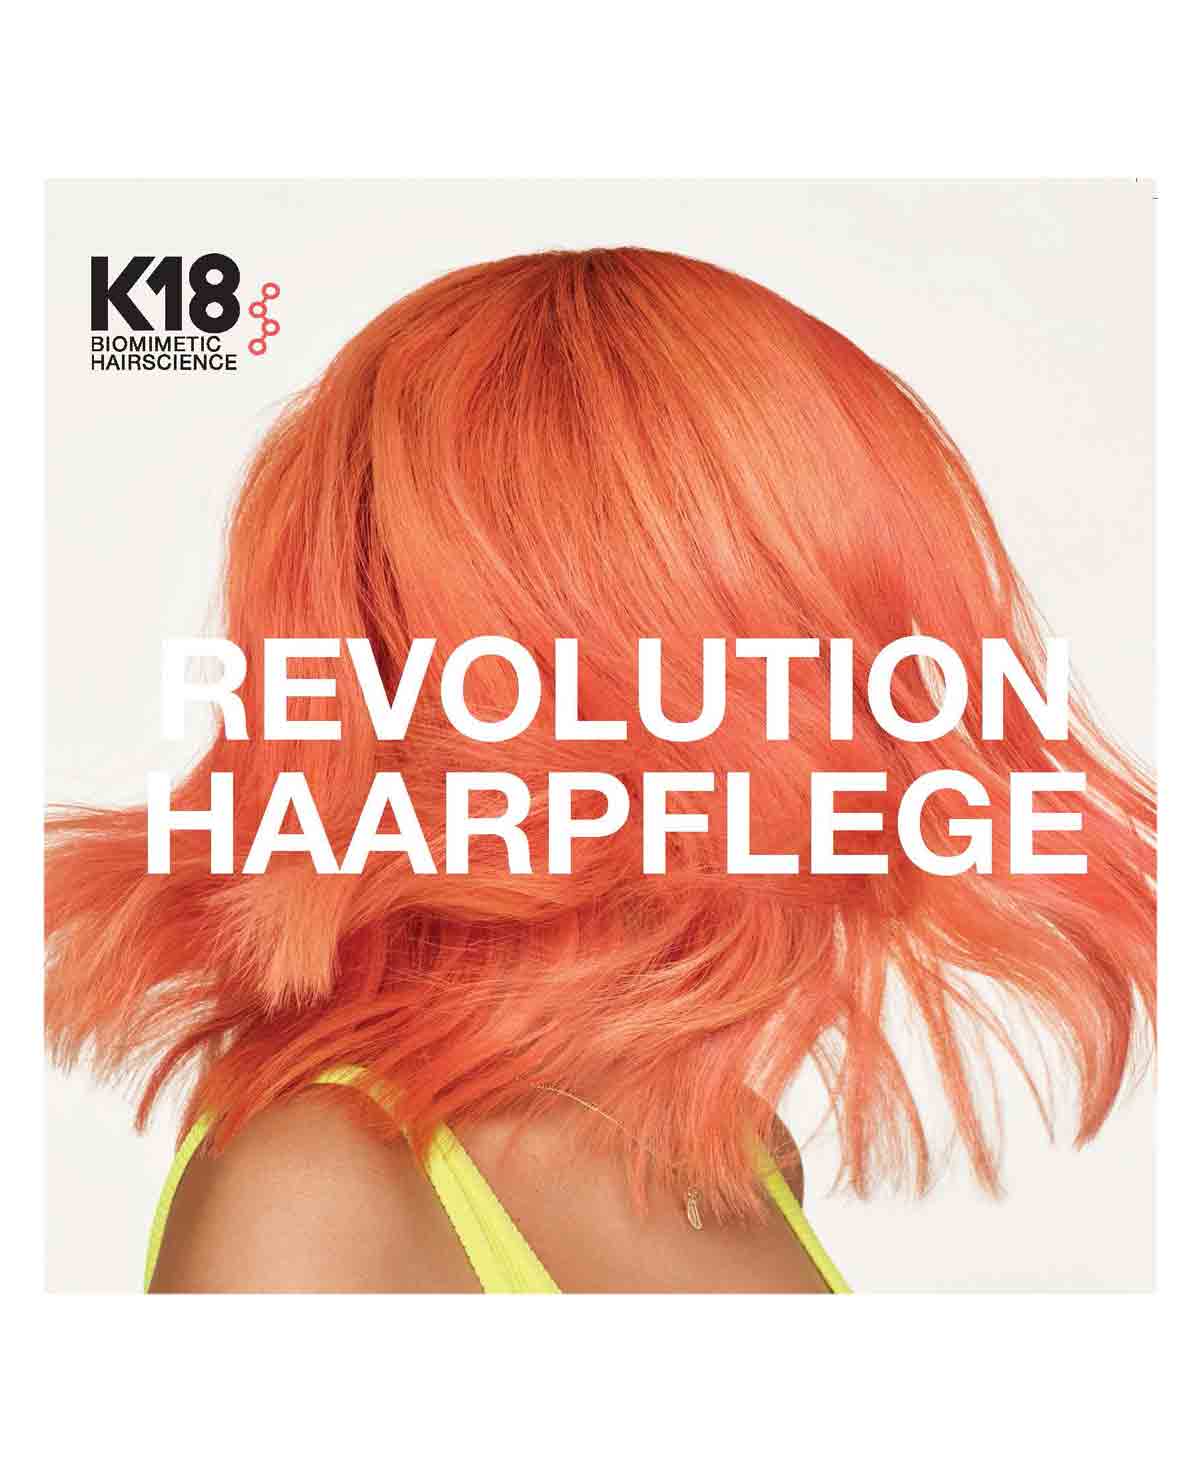 K18 Hair Mask Brochure DE